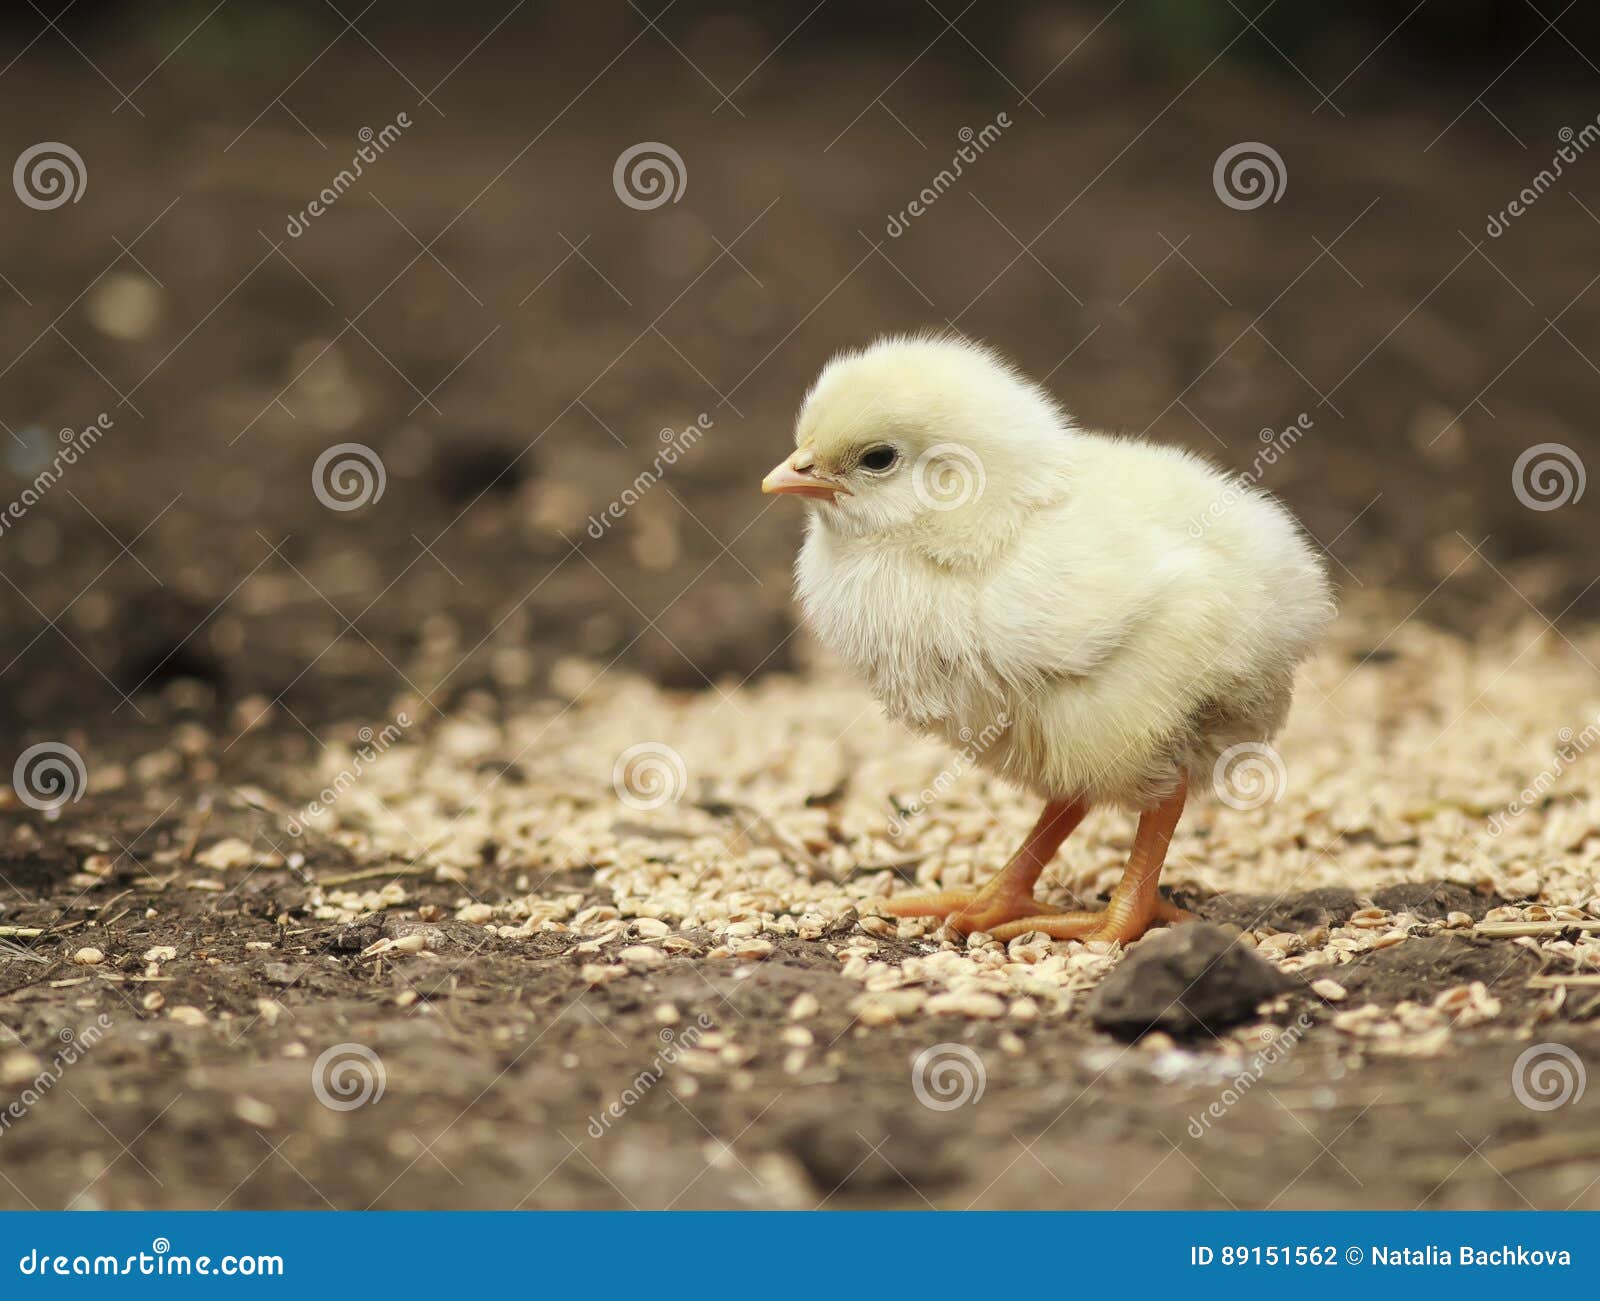 Barnyard Funny Little Chicken Walking Around the Farm Yard Stock Photo -  Image of seed, bird: 89151562